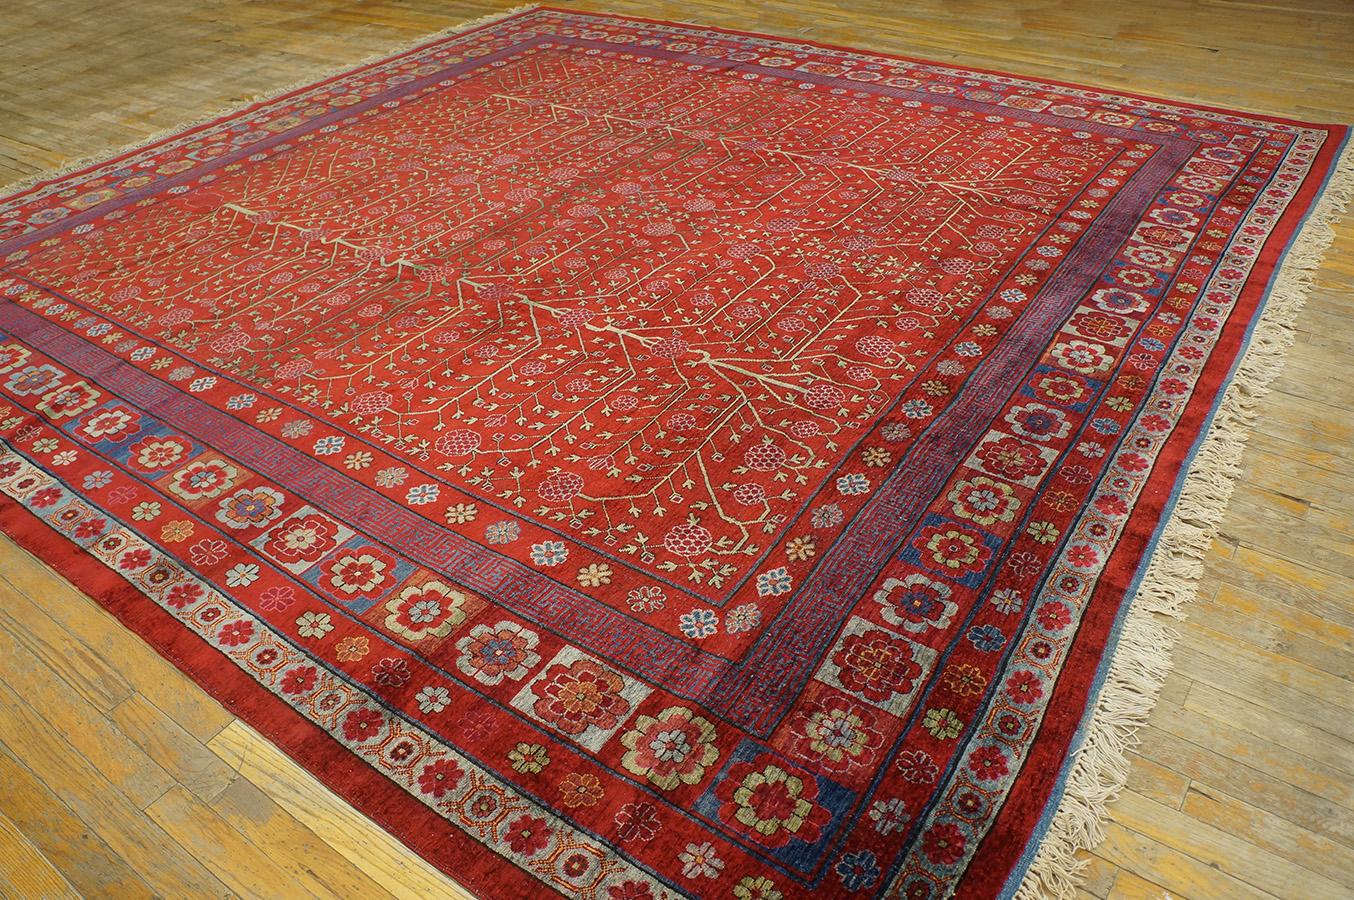 Early 19th Century Central Asian Chinese Khotan Silk Carpet 
11'2'' x 11'4'' - 340 x 345 